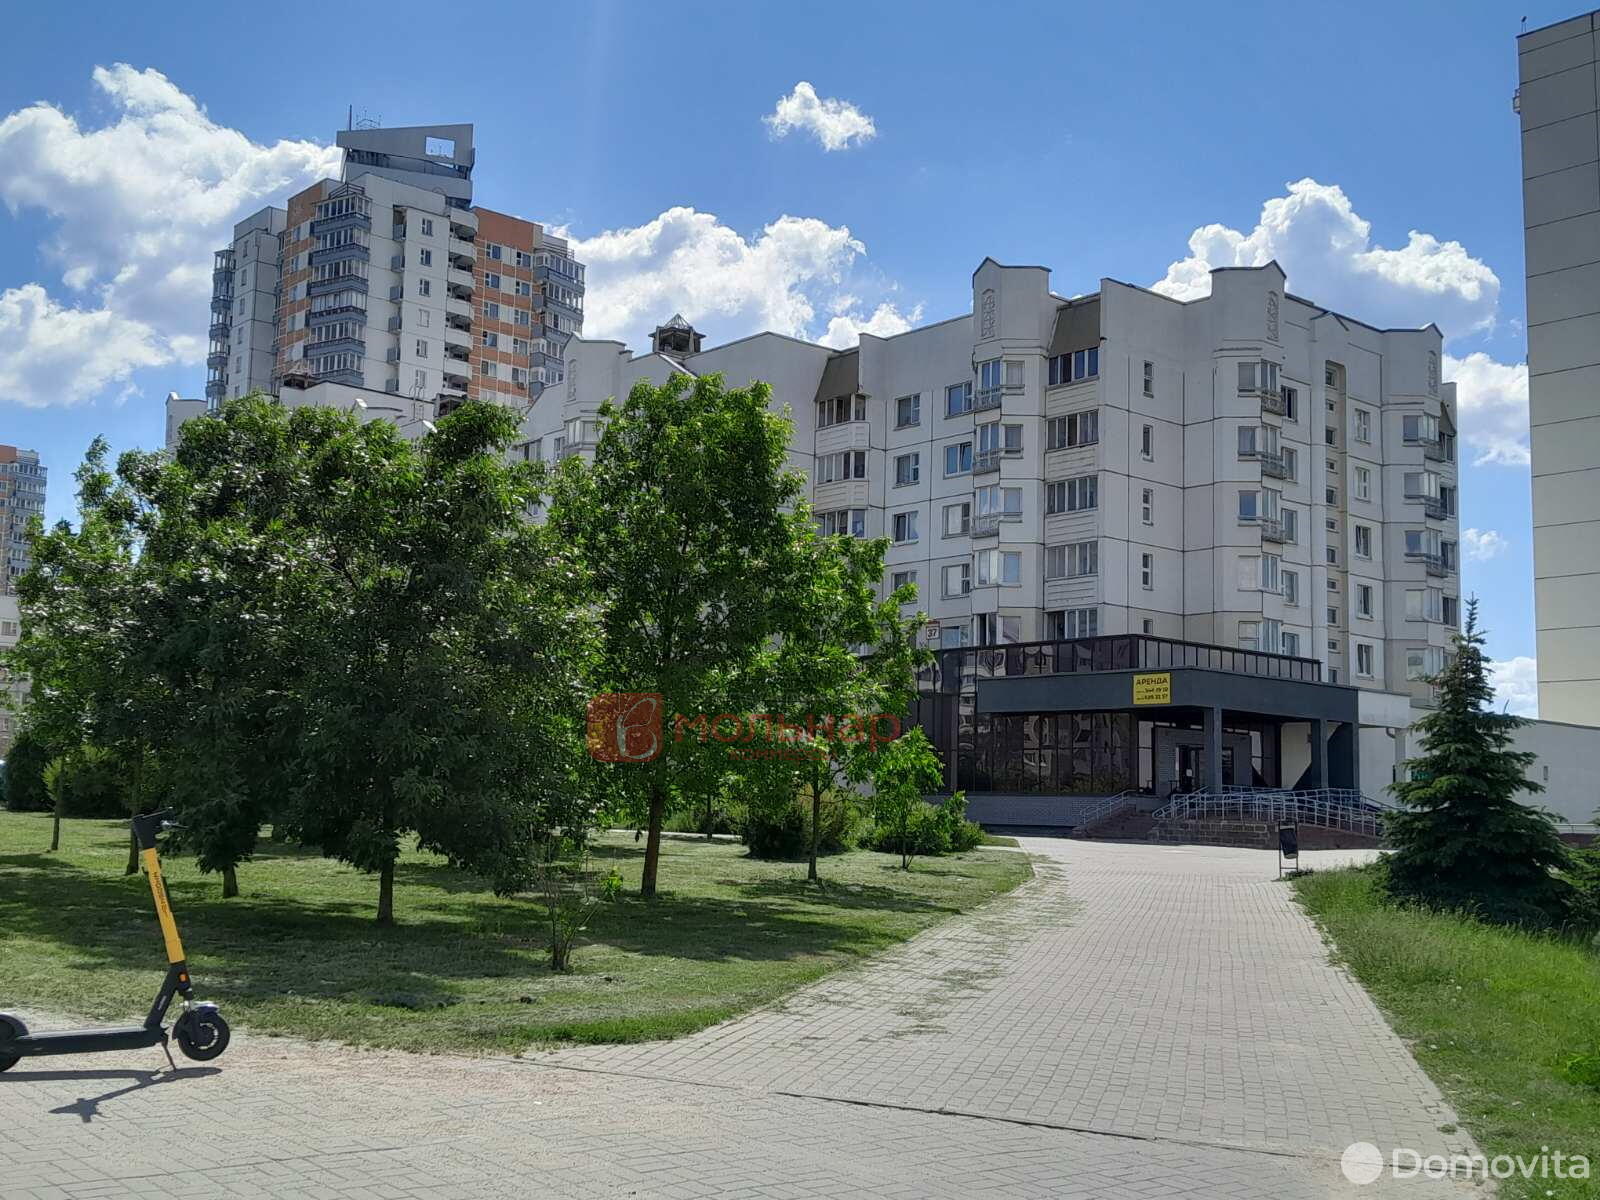 Снять торговую точку на ул. Кунцевщина, д. 37 в Минске, 8685EUR, код 965123 - фото 2